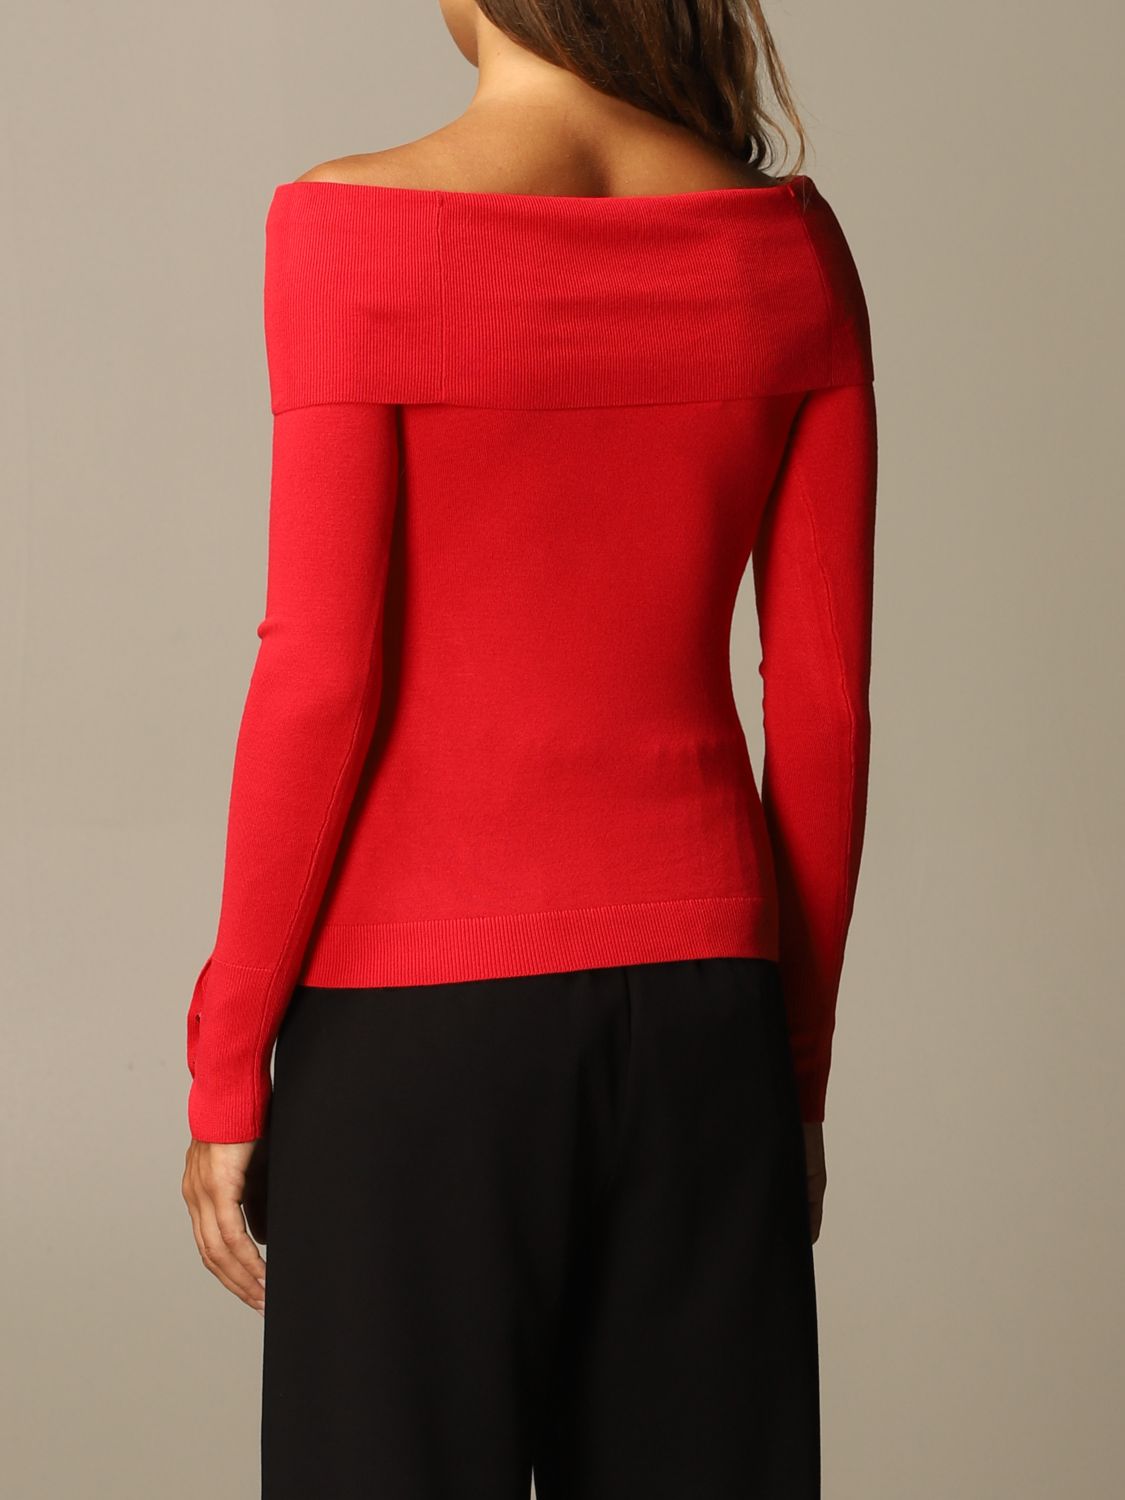 Liu Jo Outlet: sweater for woman - Red | Liu Jo sweater MF0077MA49I